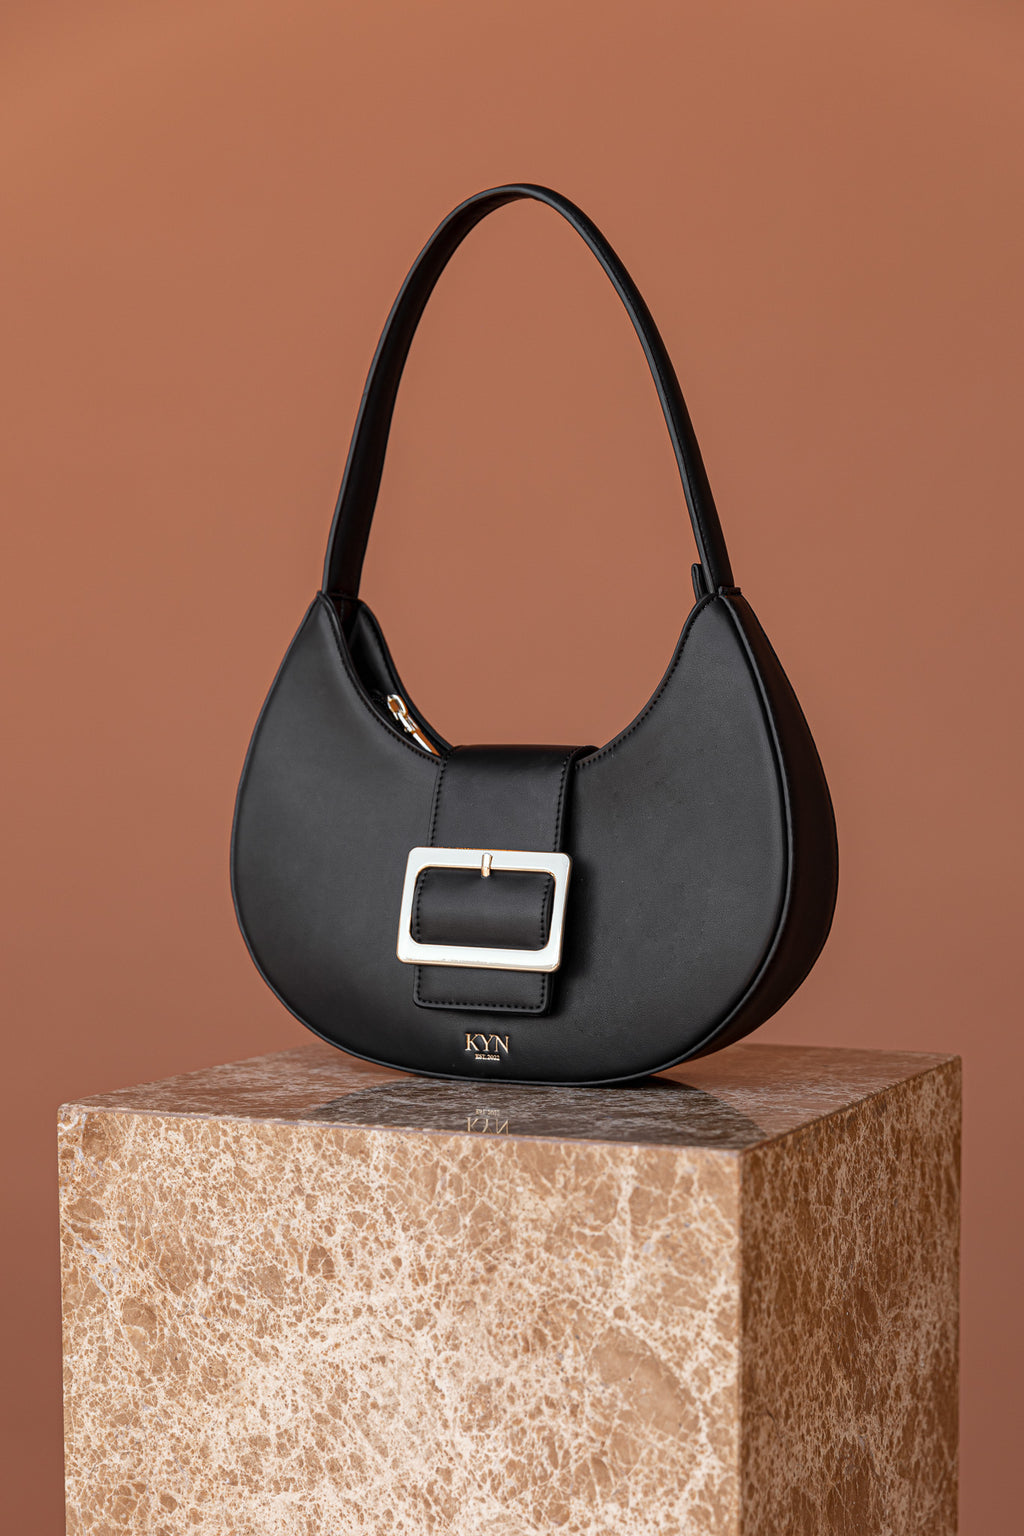 Kyn black womans vegan leather handbag